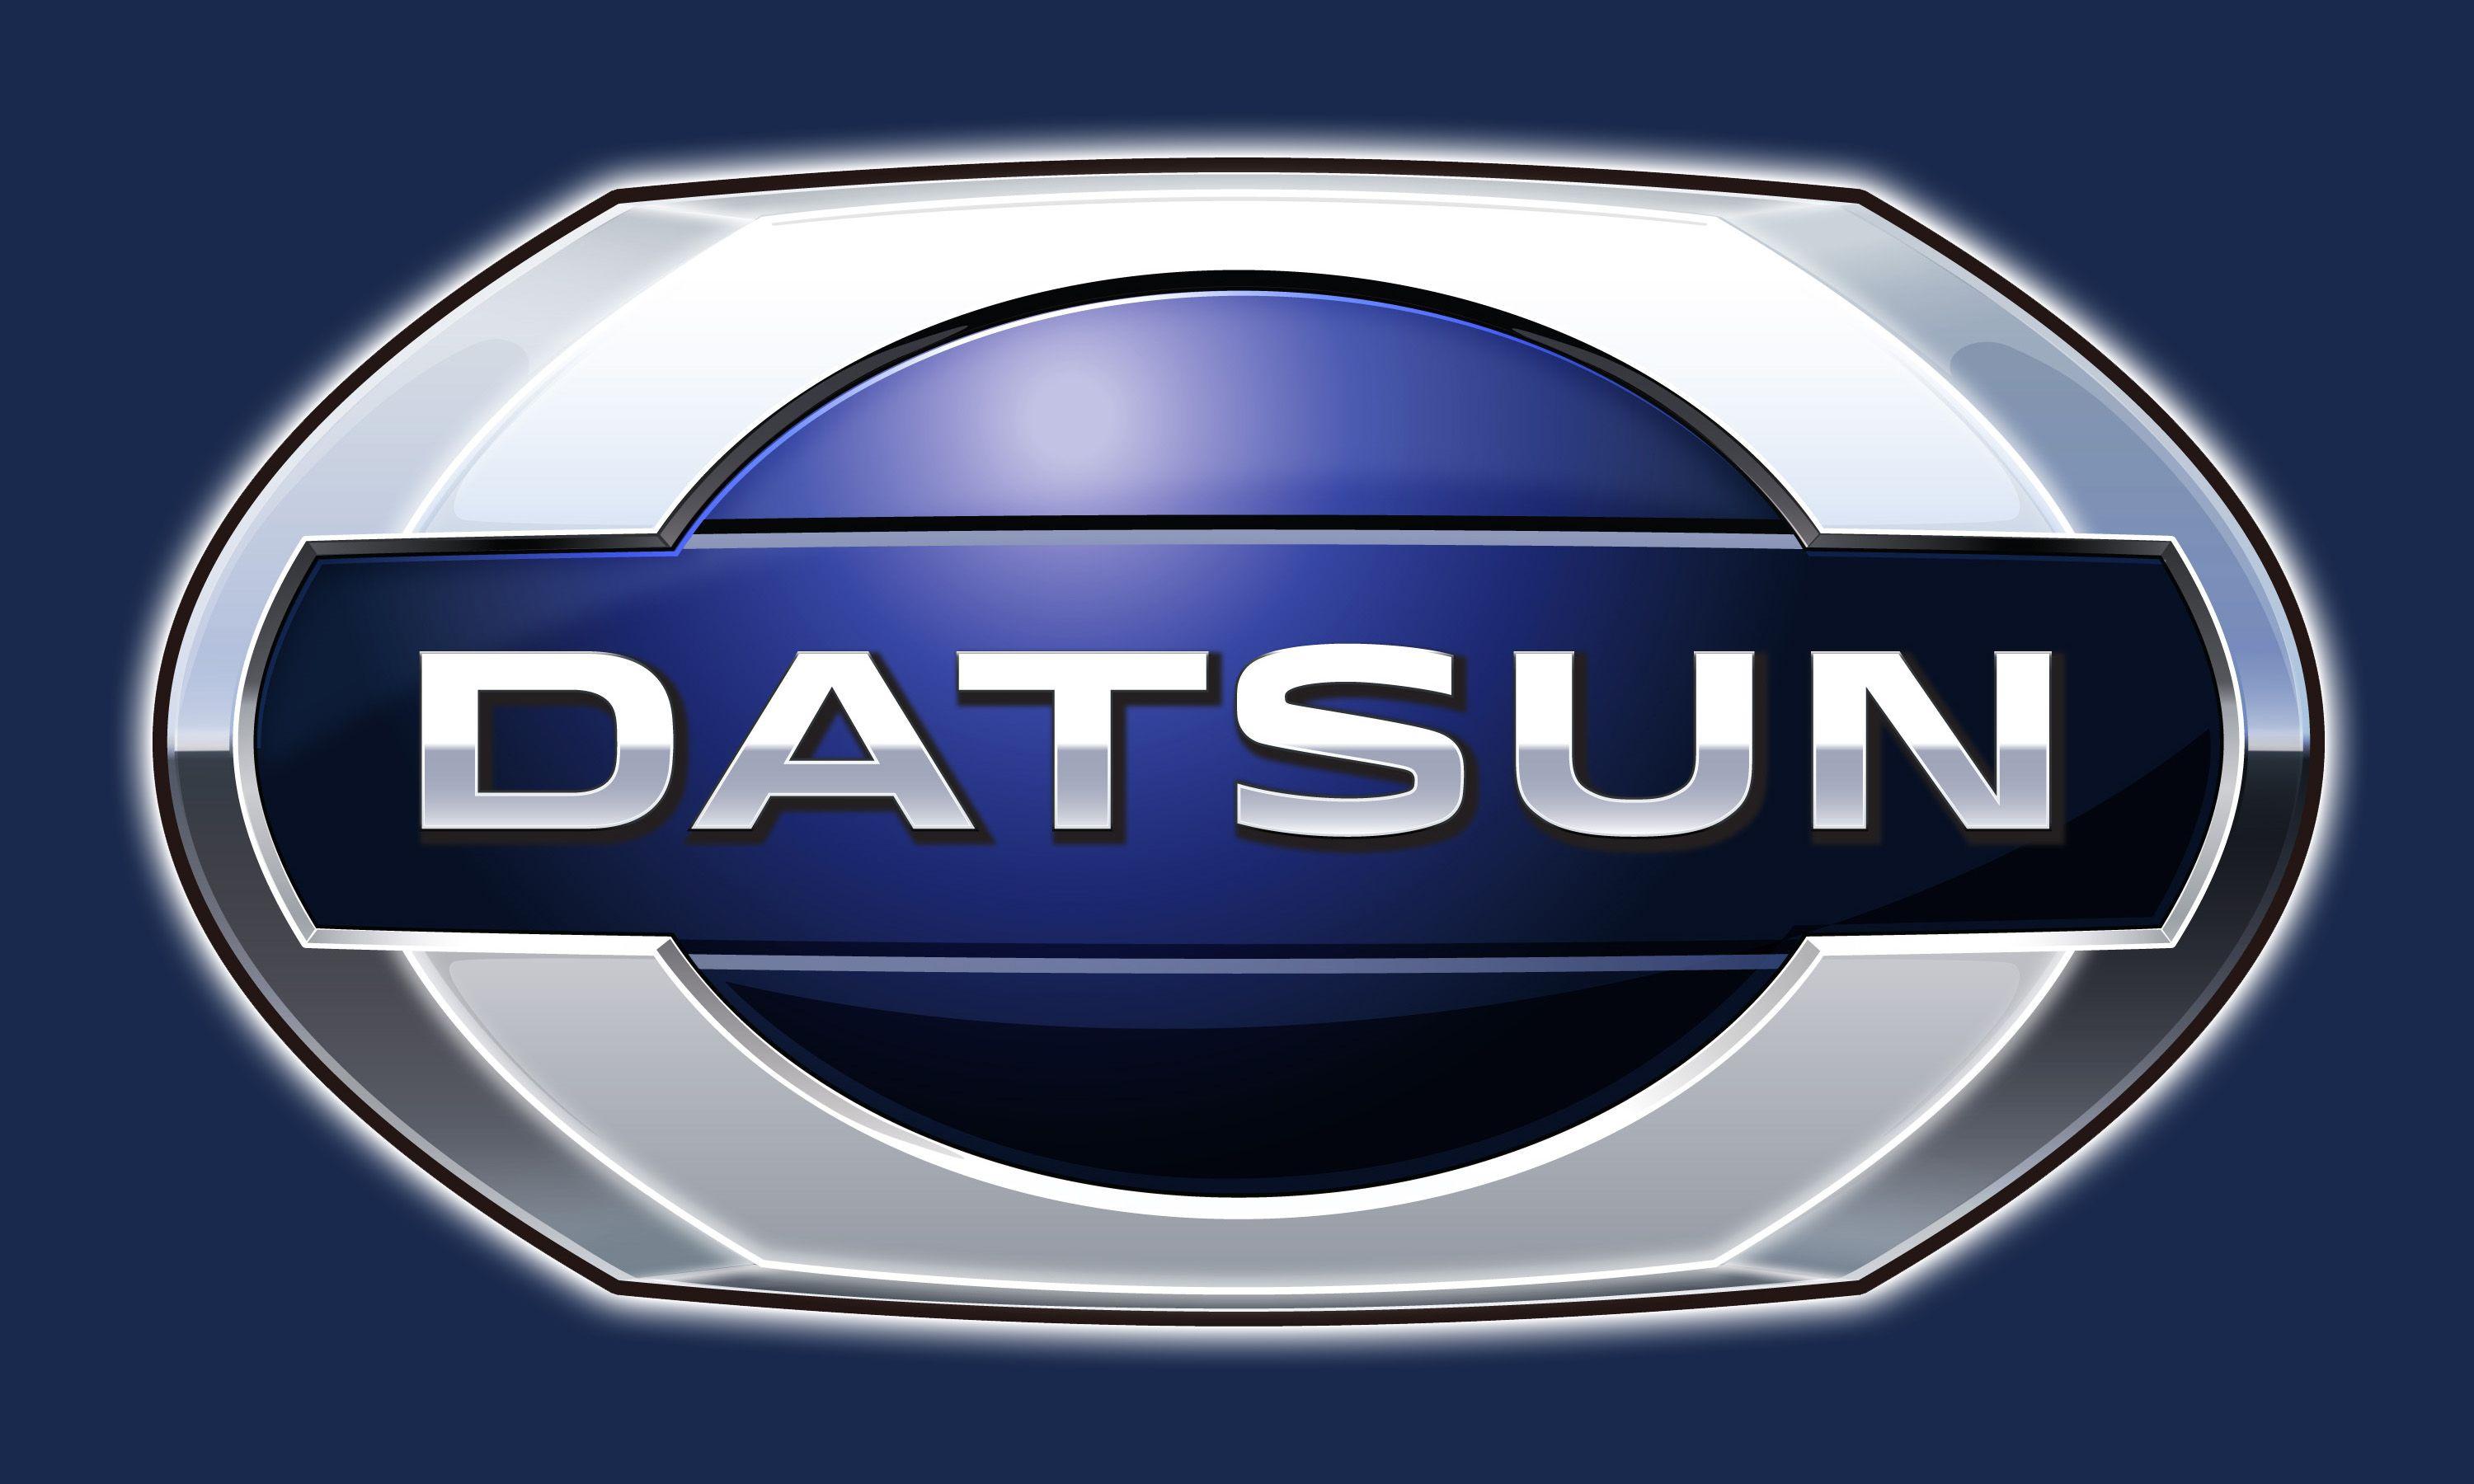 Datsun Logo - Datsun Logo Meaning and History, latest models | World Cars Brands